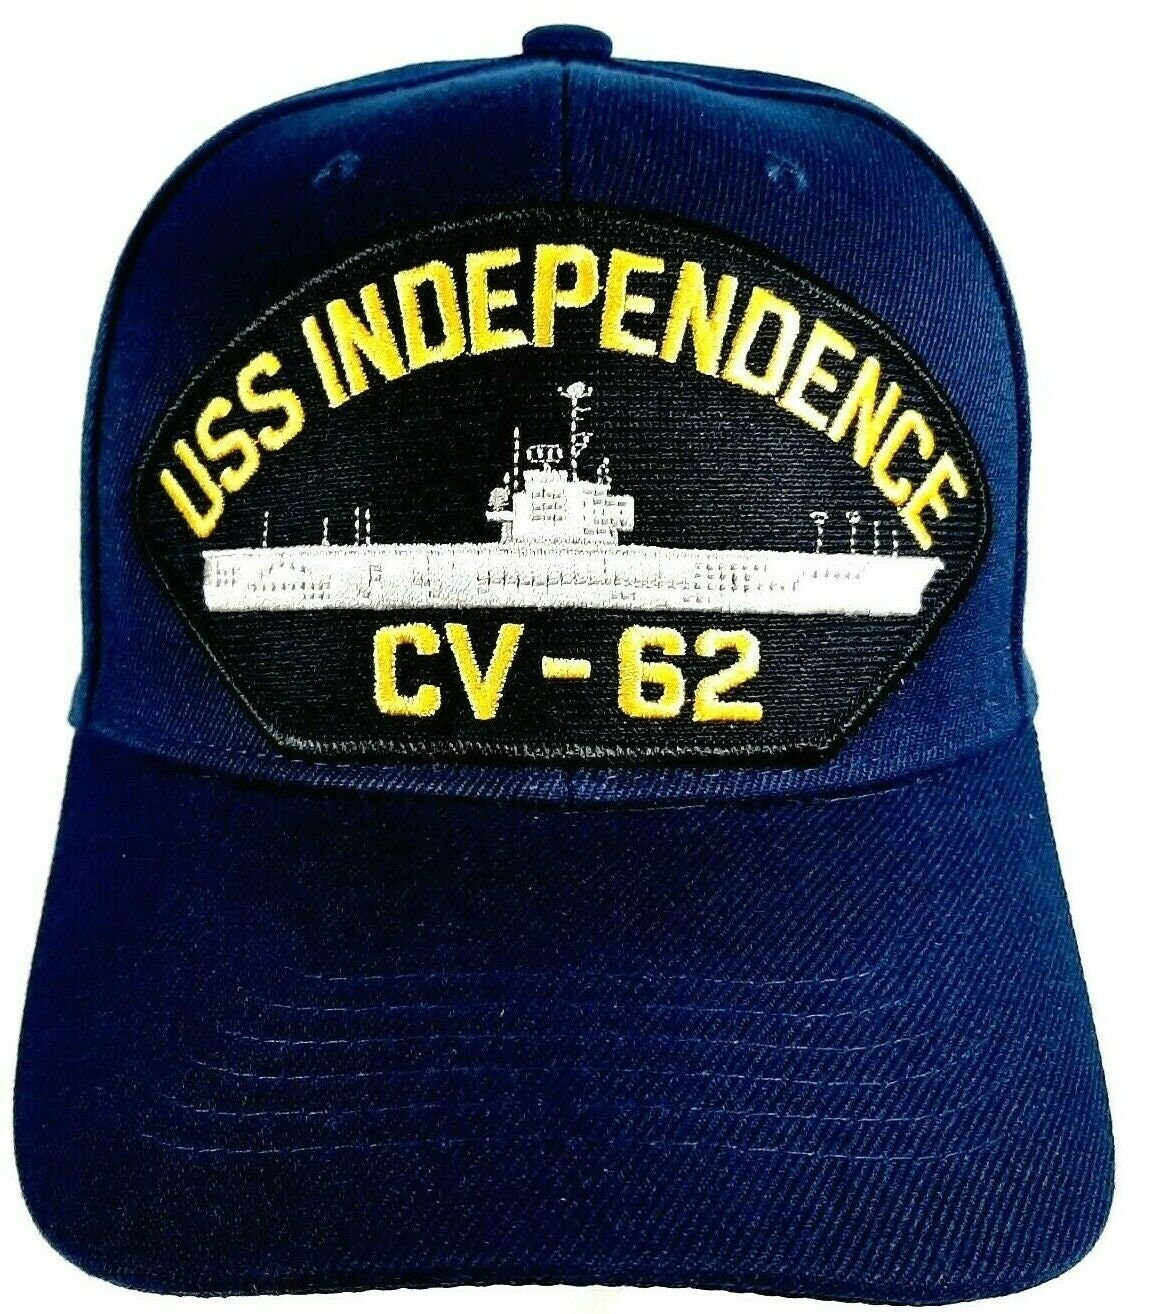 US Navy USS Independence CV-62 Men's Patch Cap Hat Navy Blue Acrylic